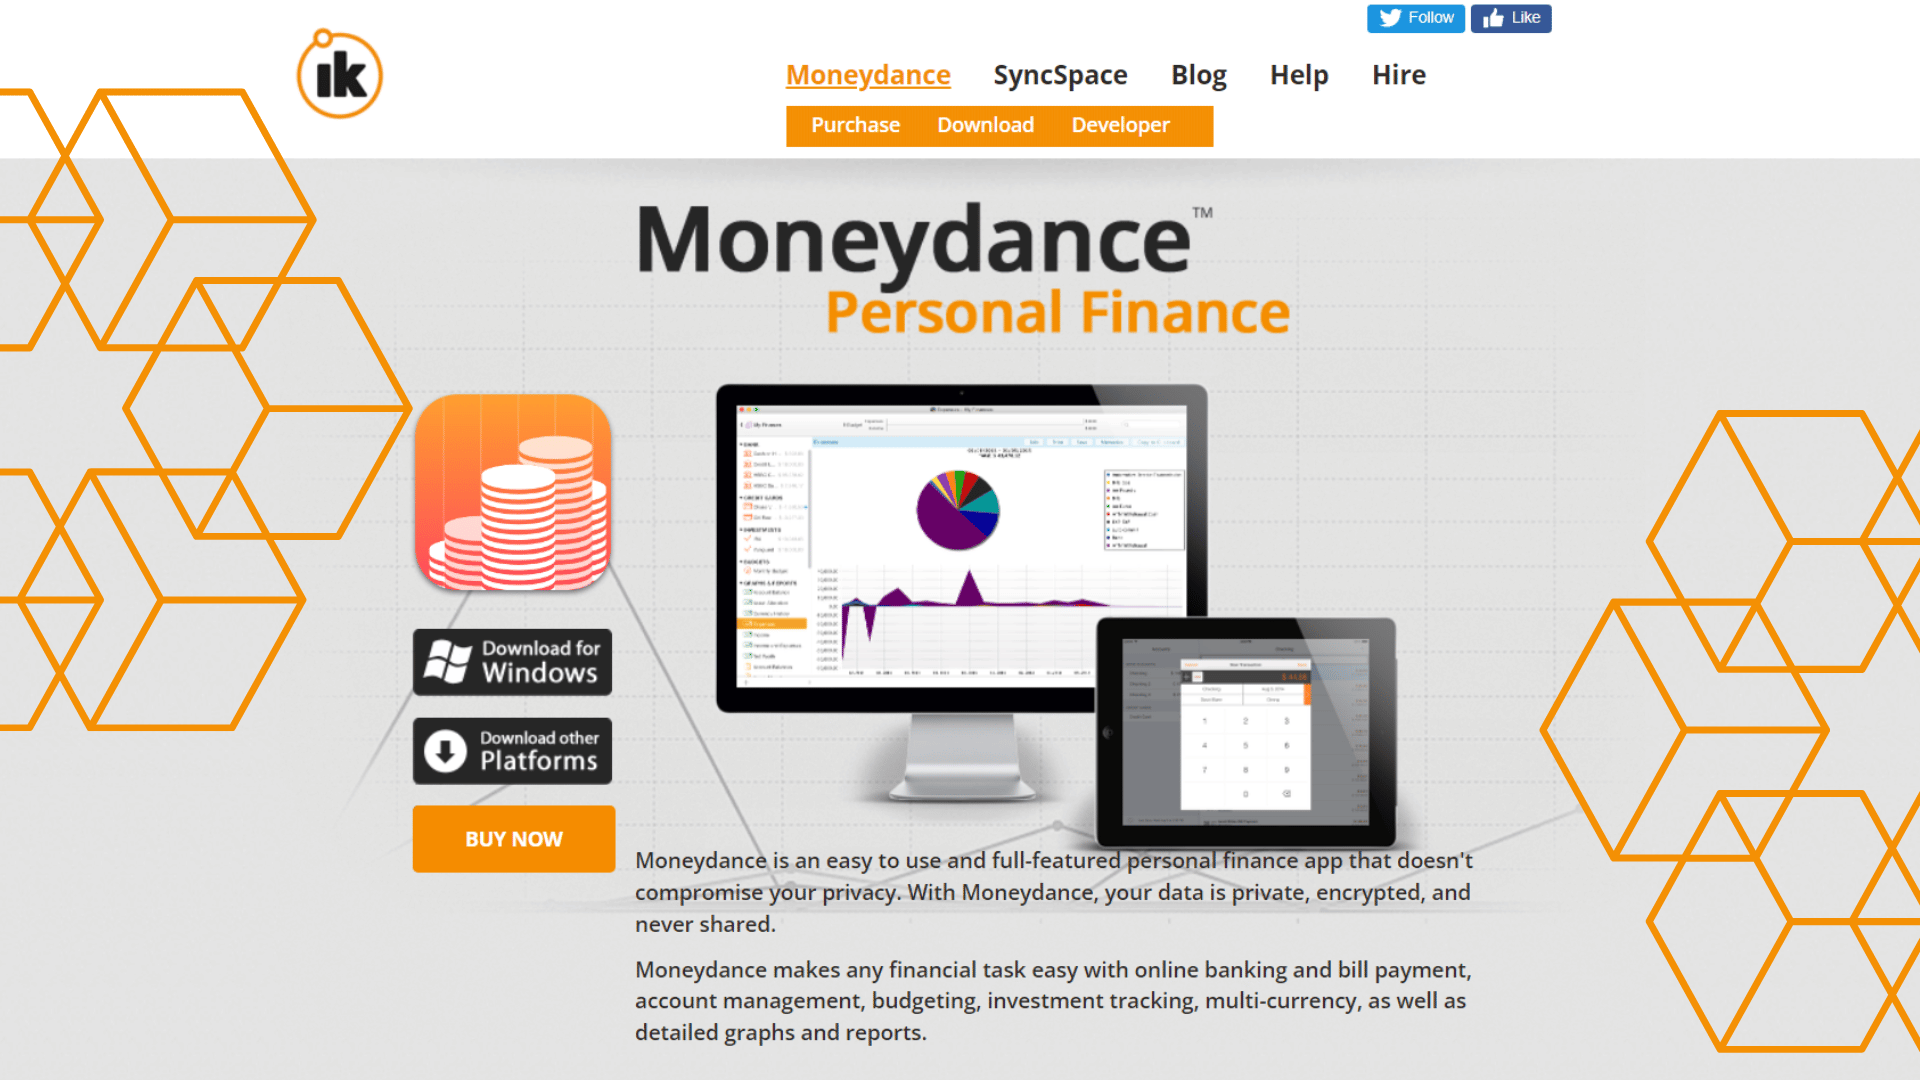 Moneydance Features